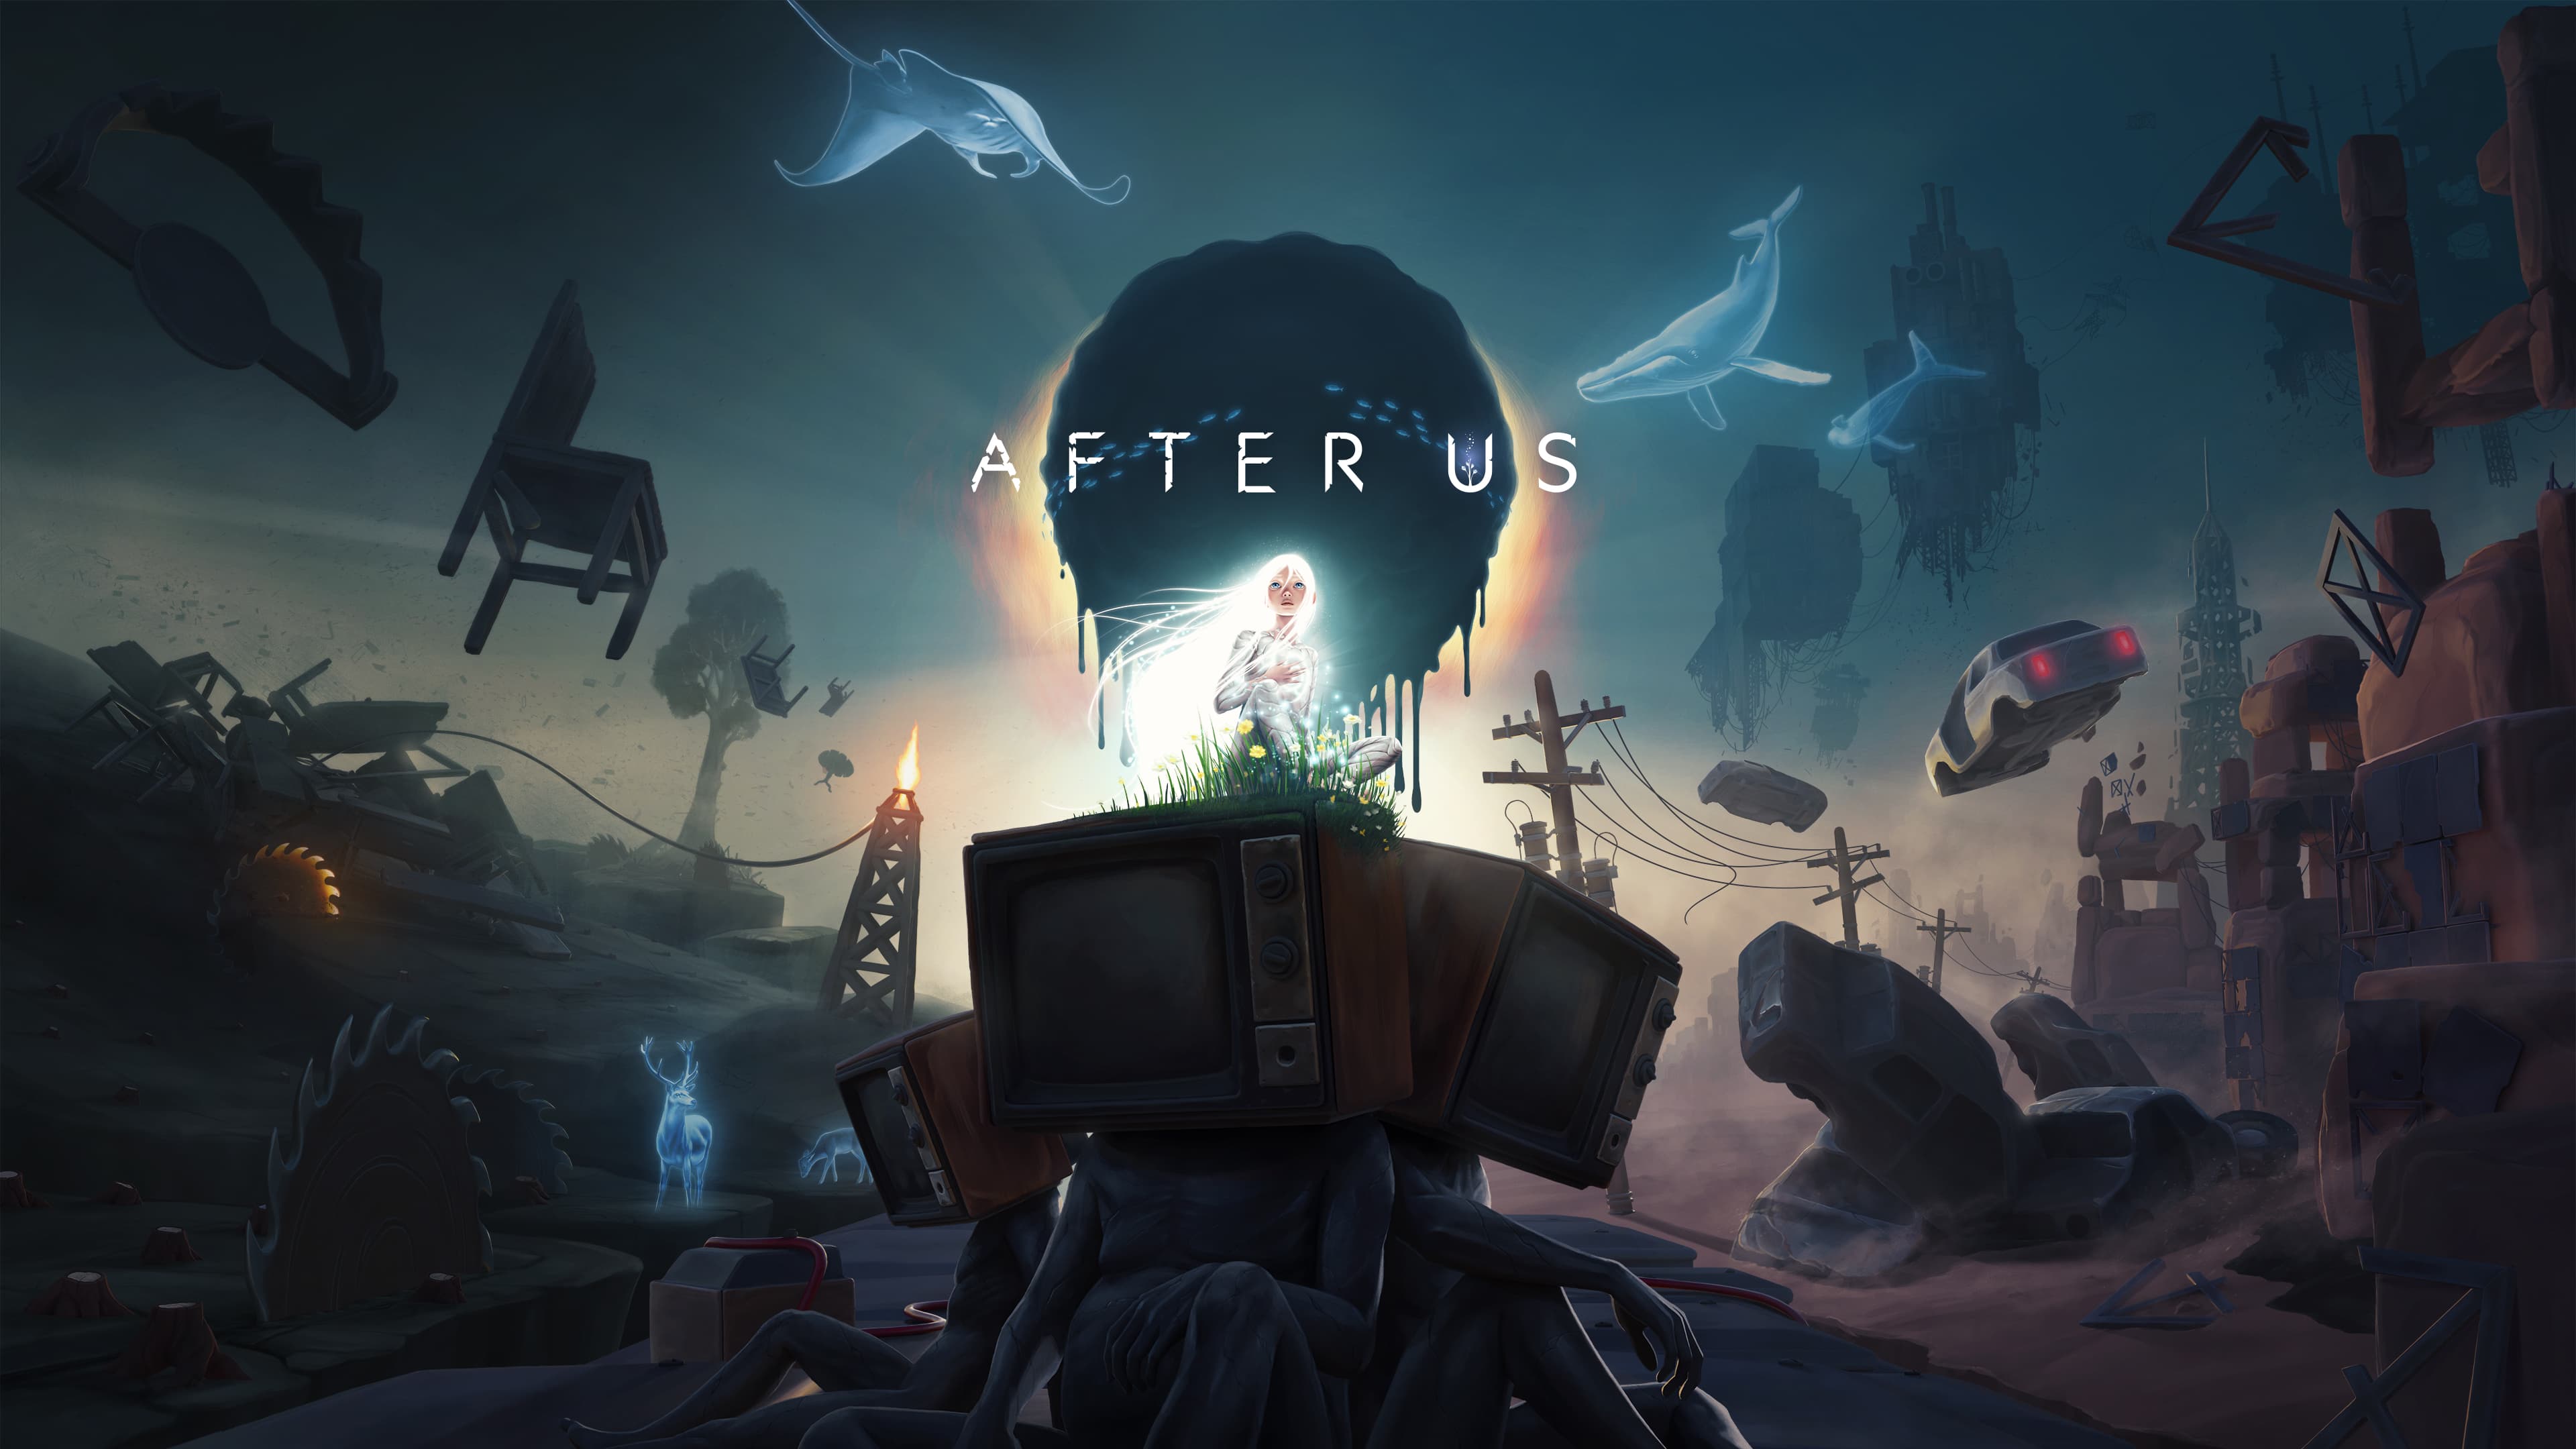 《After Us》现已于获准上市区域的PC、PlayStation 5和Xbox Series X